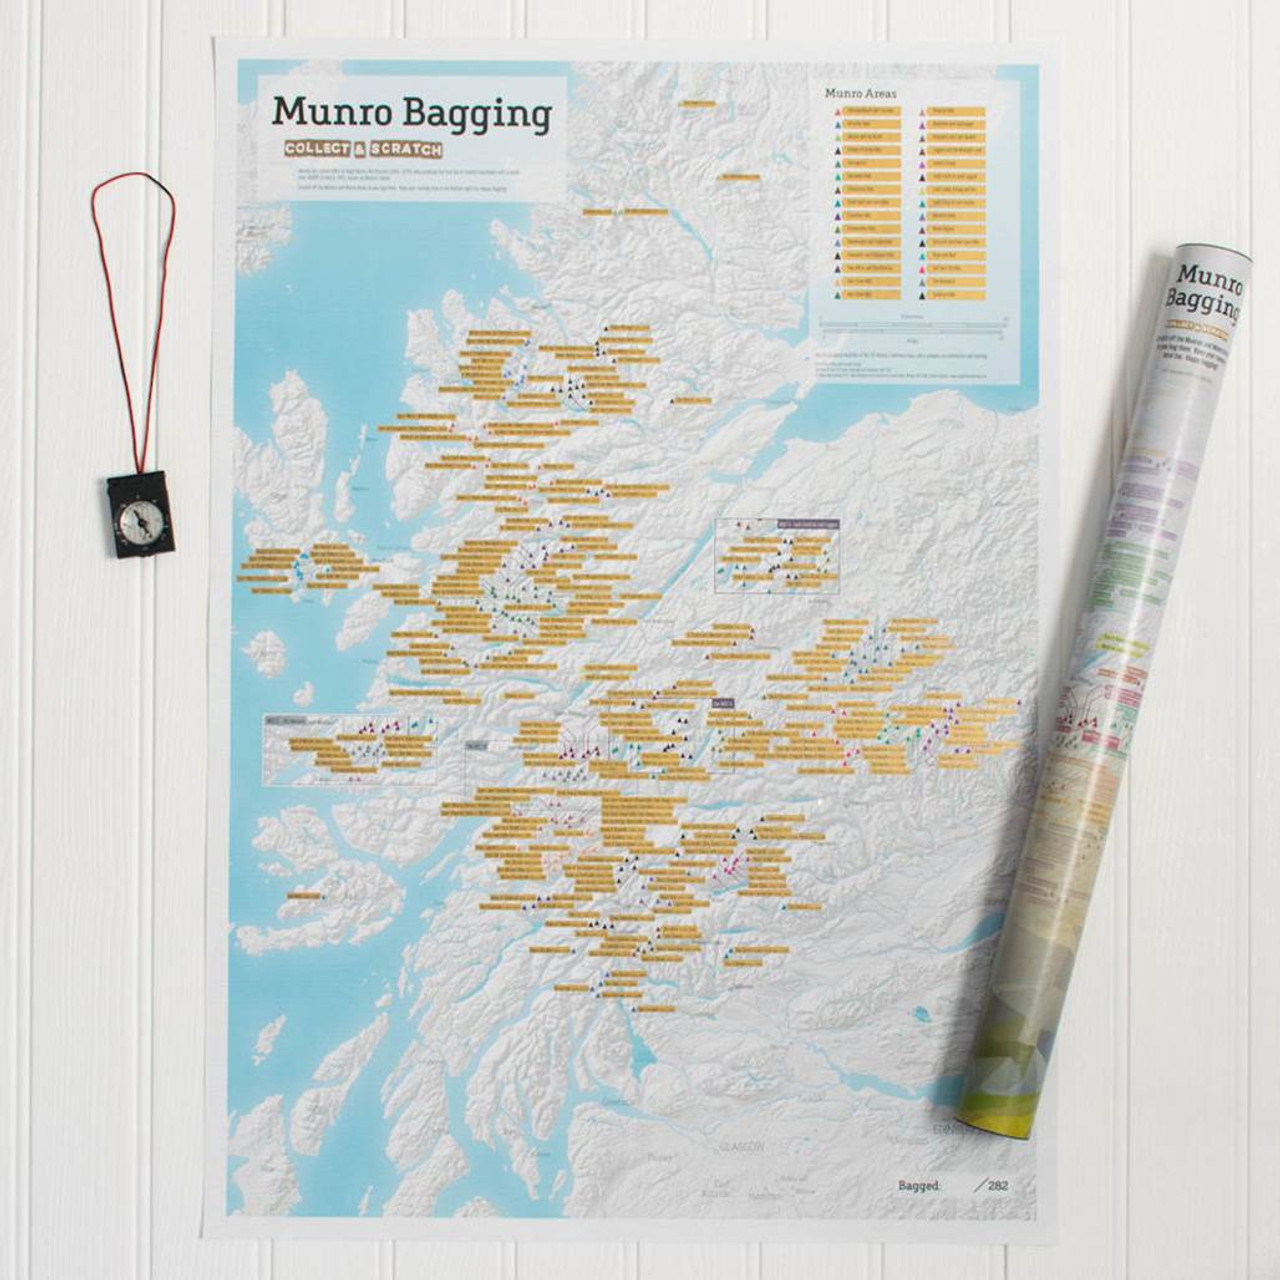 Munro Bagging CollectandScratch Off Map